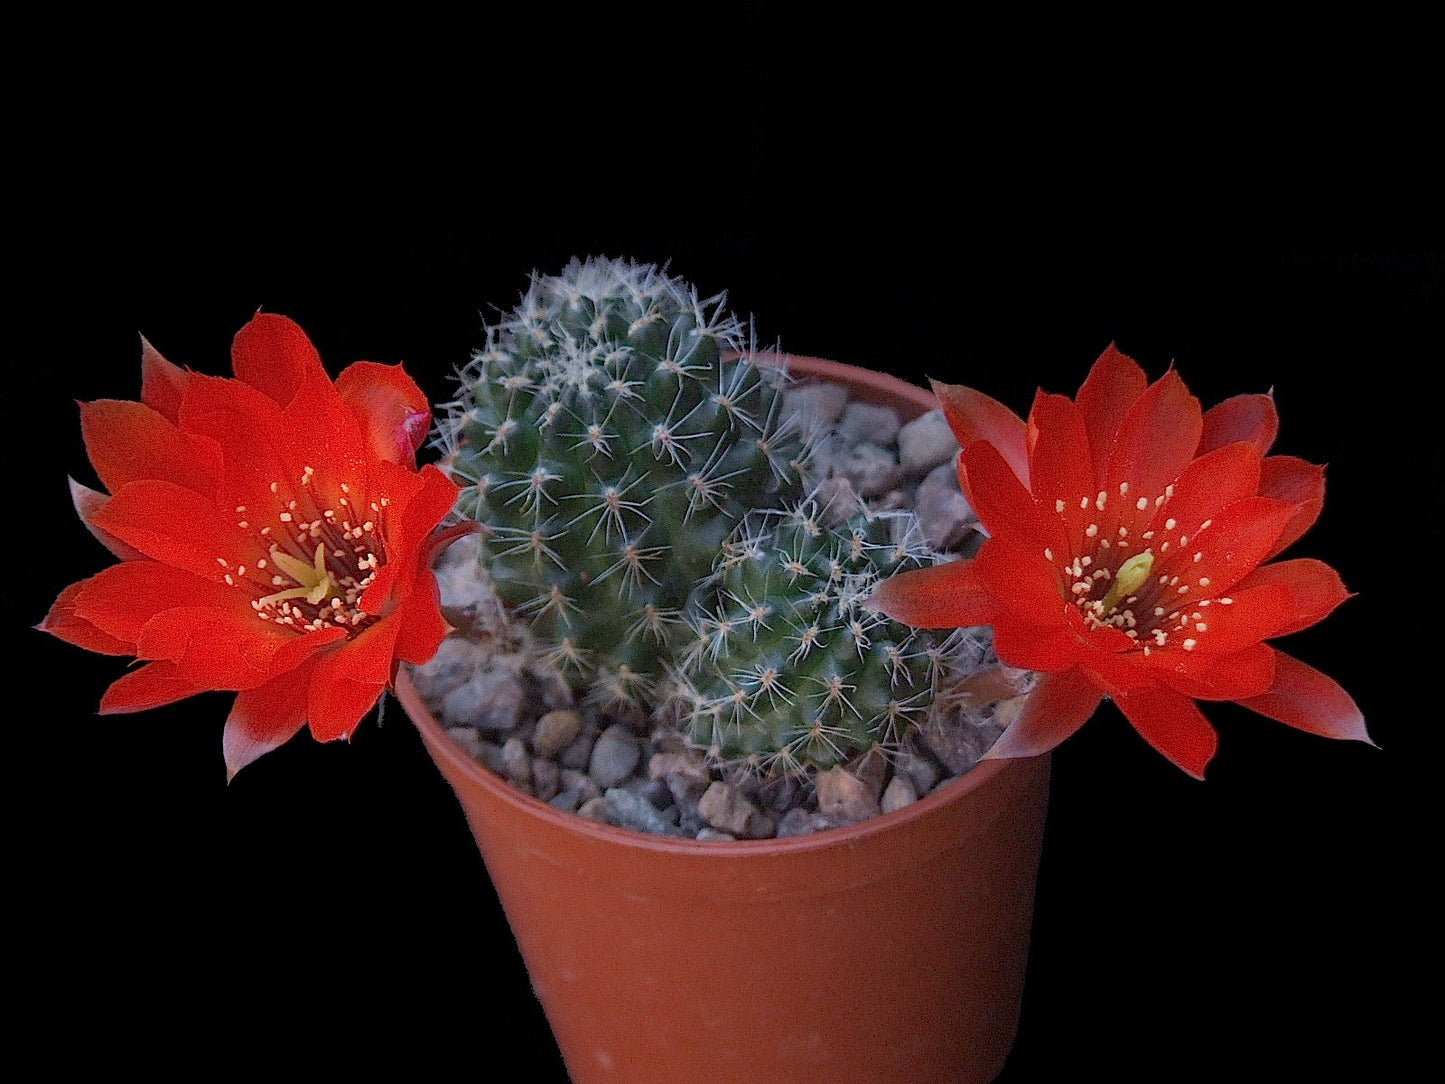 Cactus - Aylostera steinmanni - Mixed Varieties Seeds